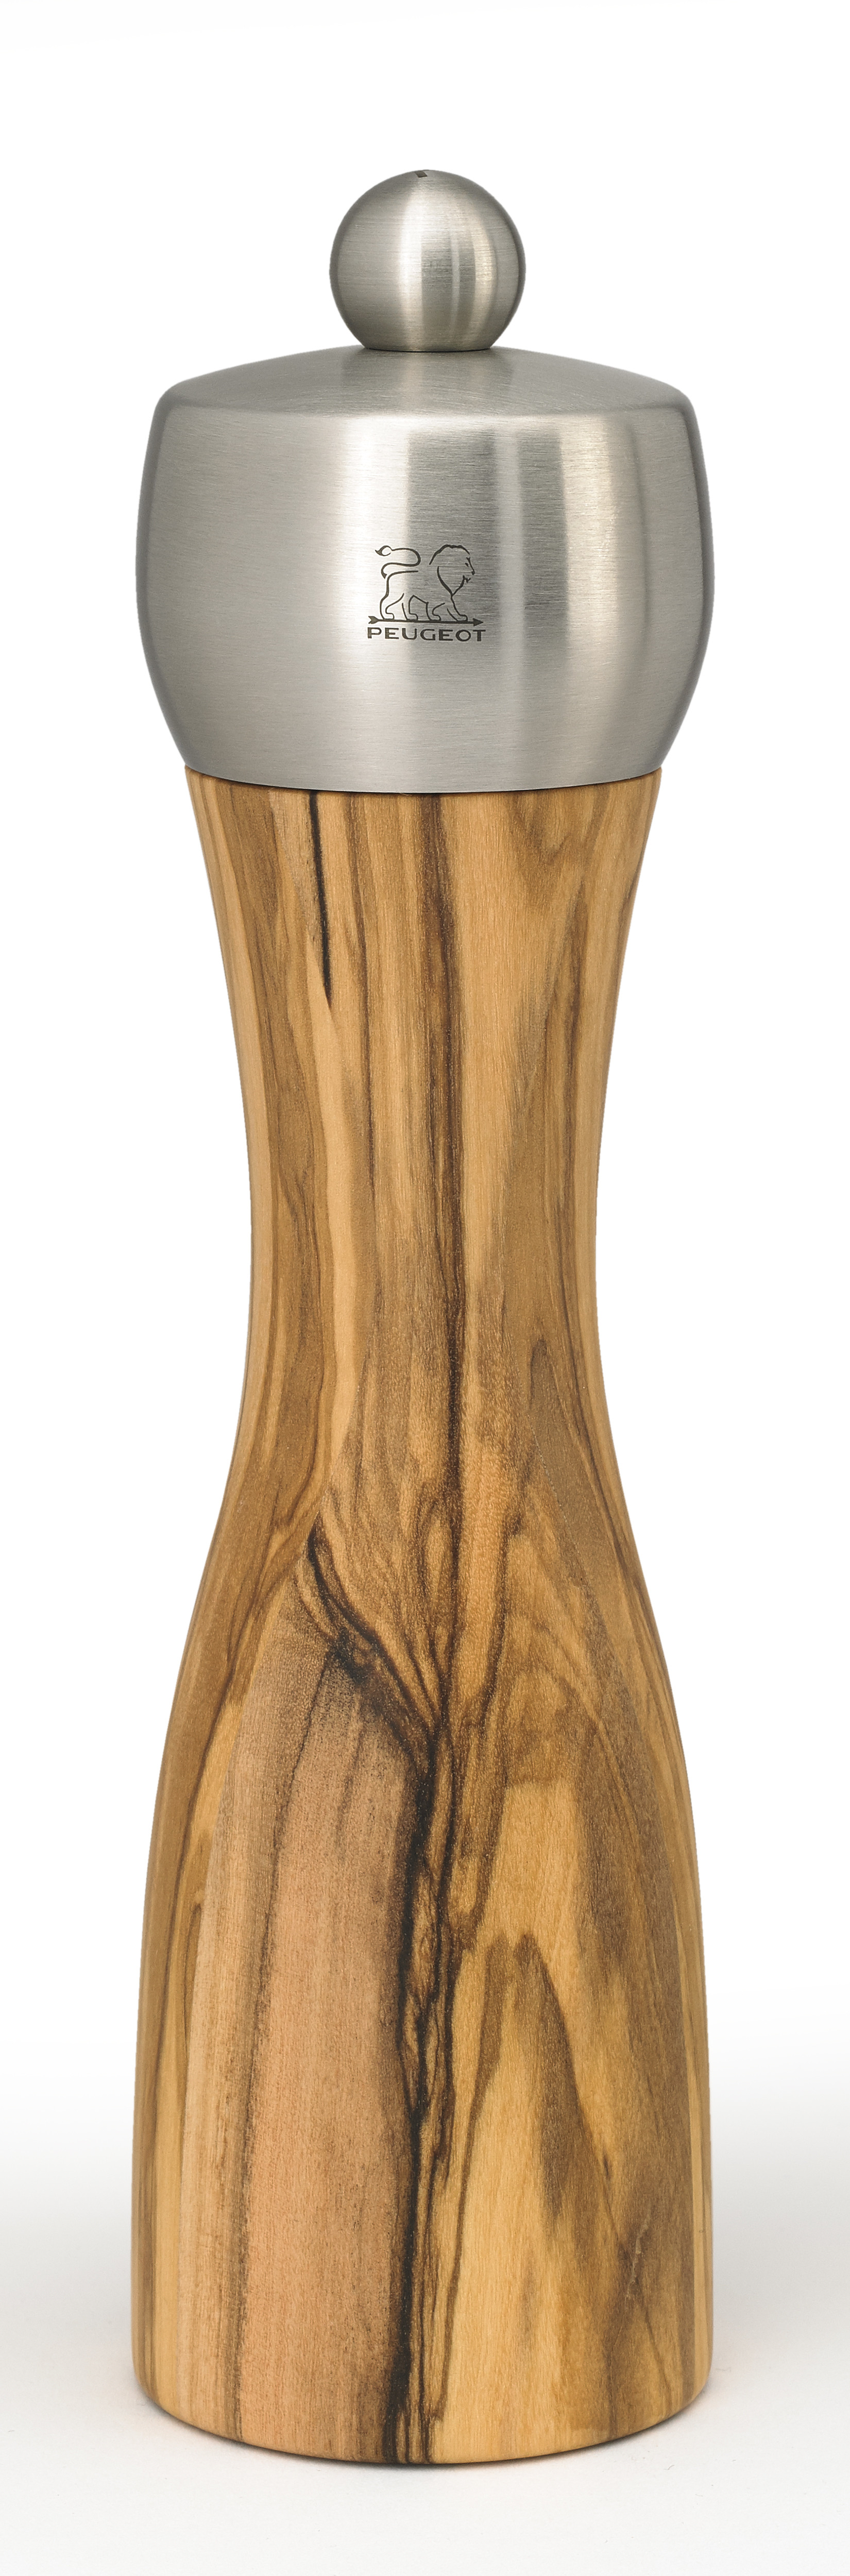 Peugeot Młynek do pieprzu z drewna oliwnego, 200 mm | Fidji Olivier PG-33828